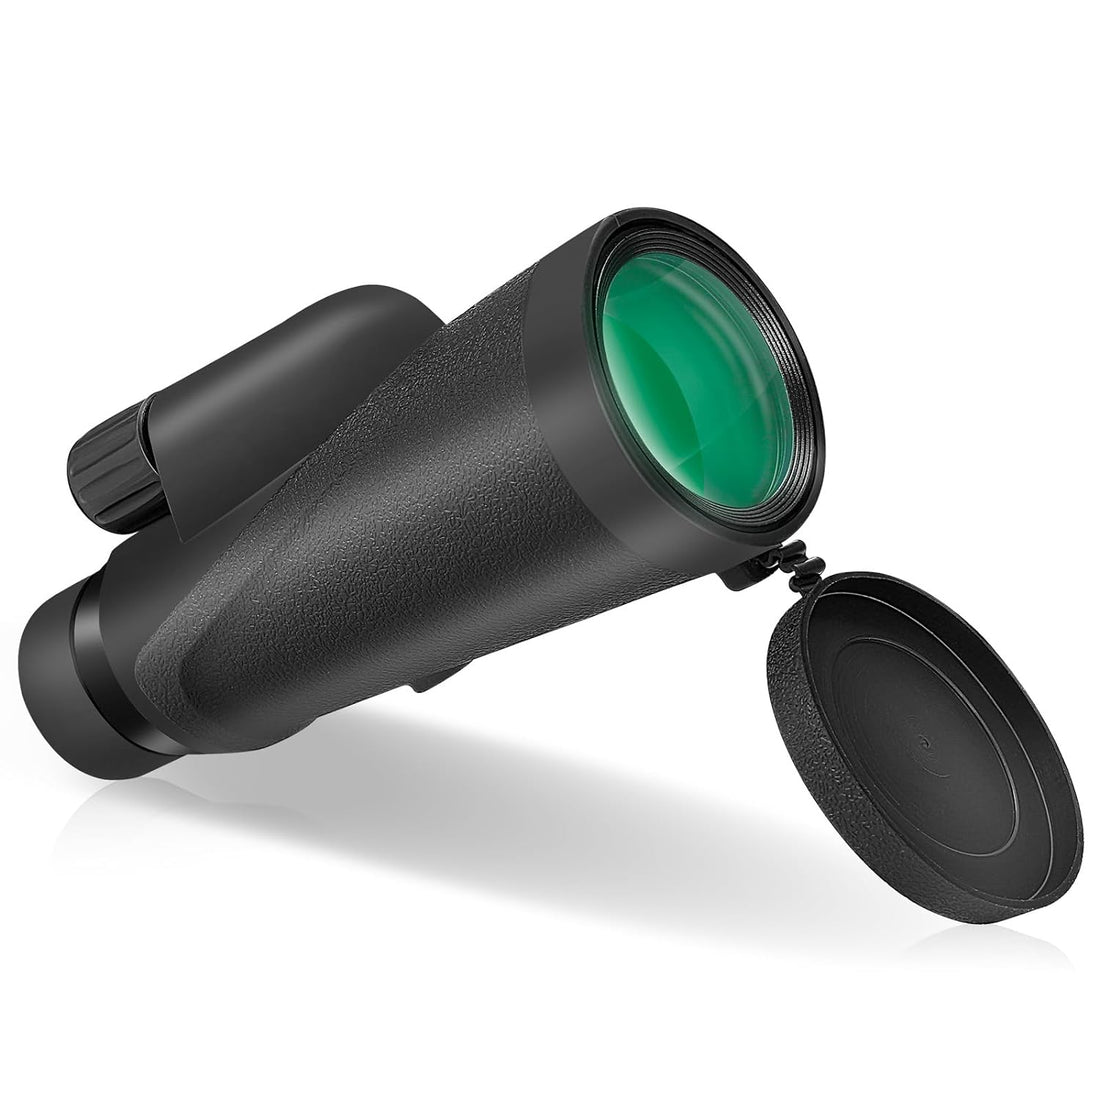 HURYSIN 8X42 mm HD Monoculars - Suitable for Bird Watching, Hunting, Travel